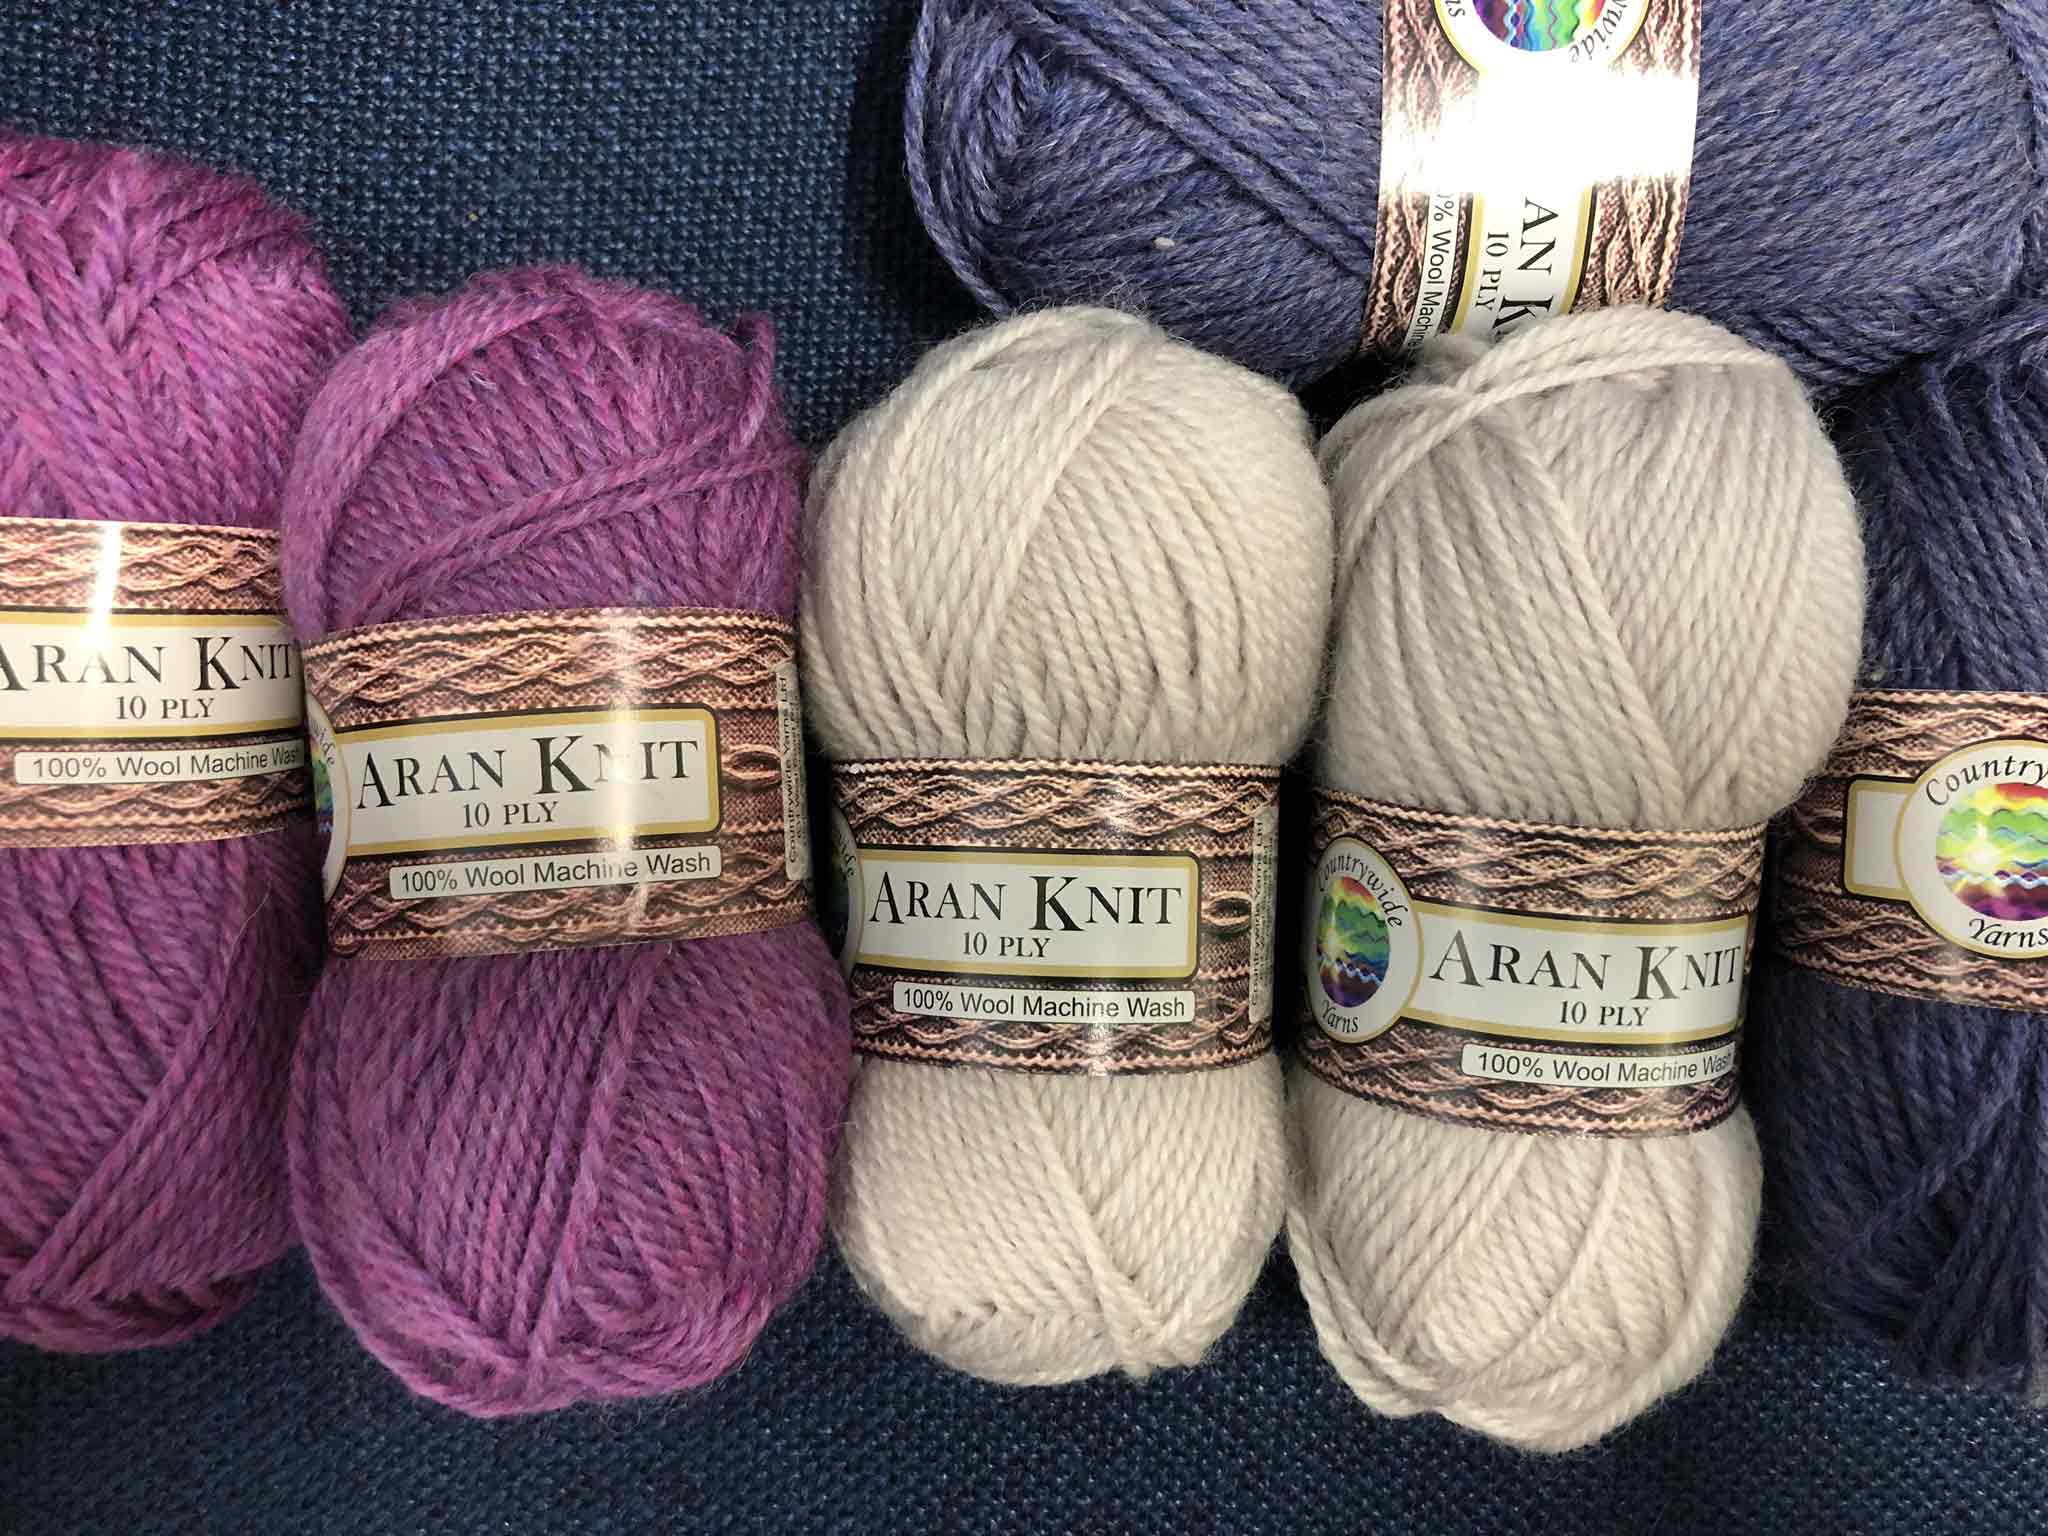 Countrywide Yarns Aran knit 10ply